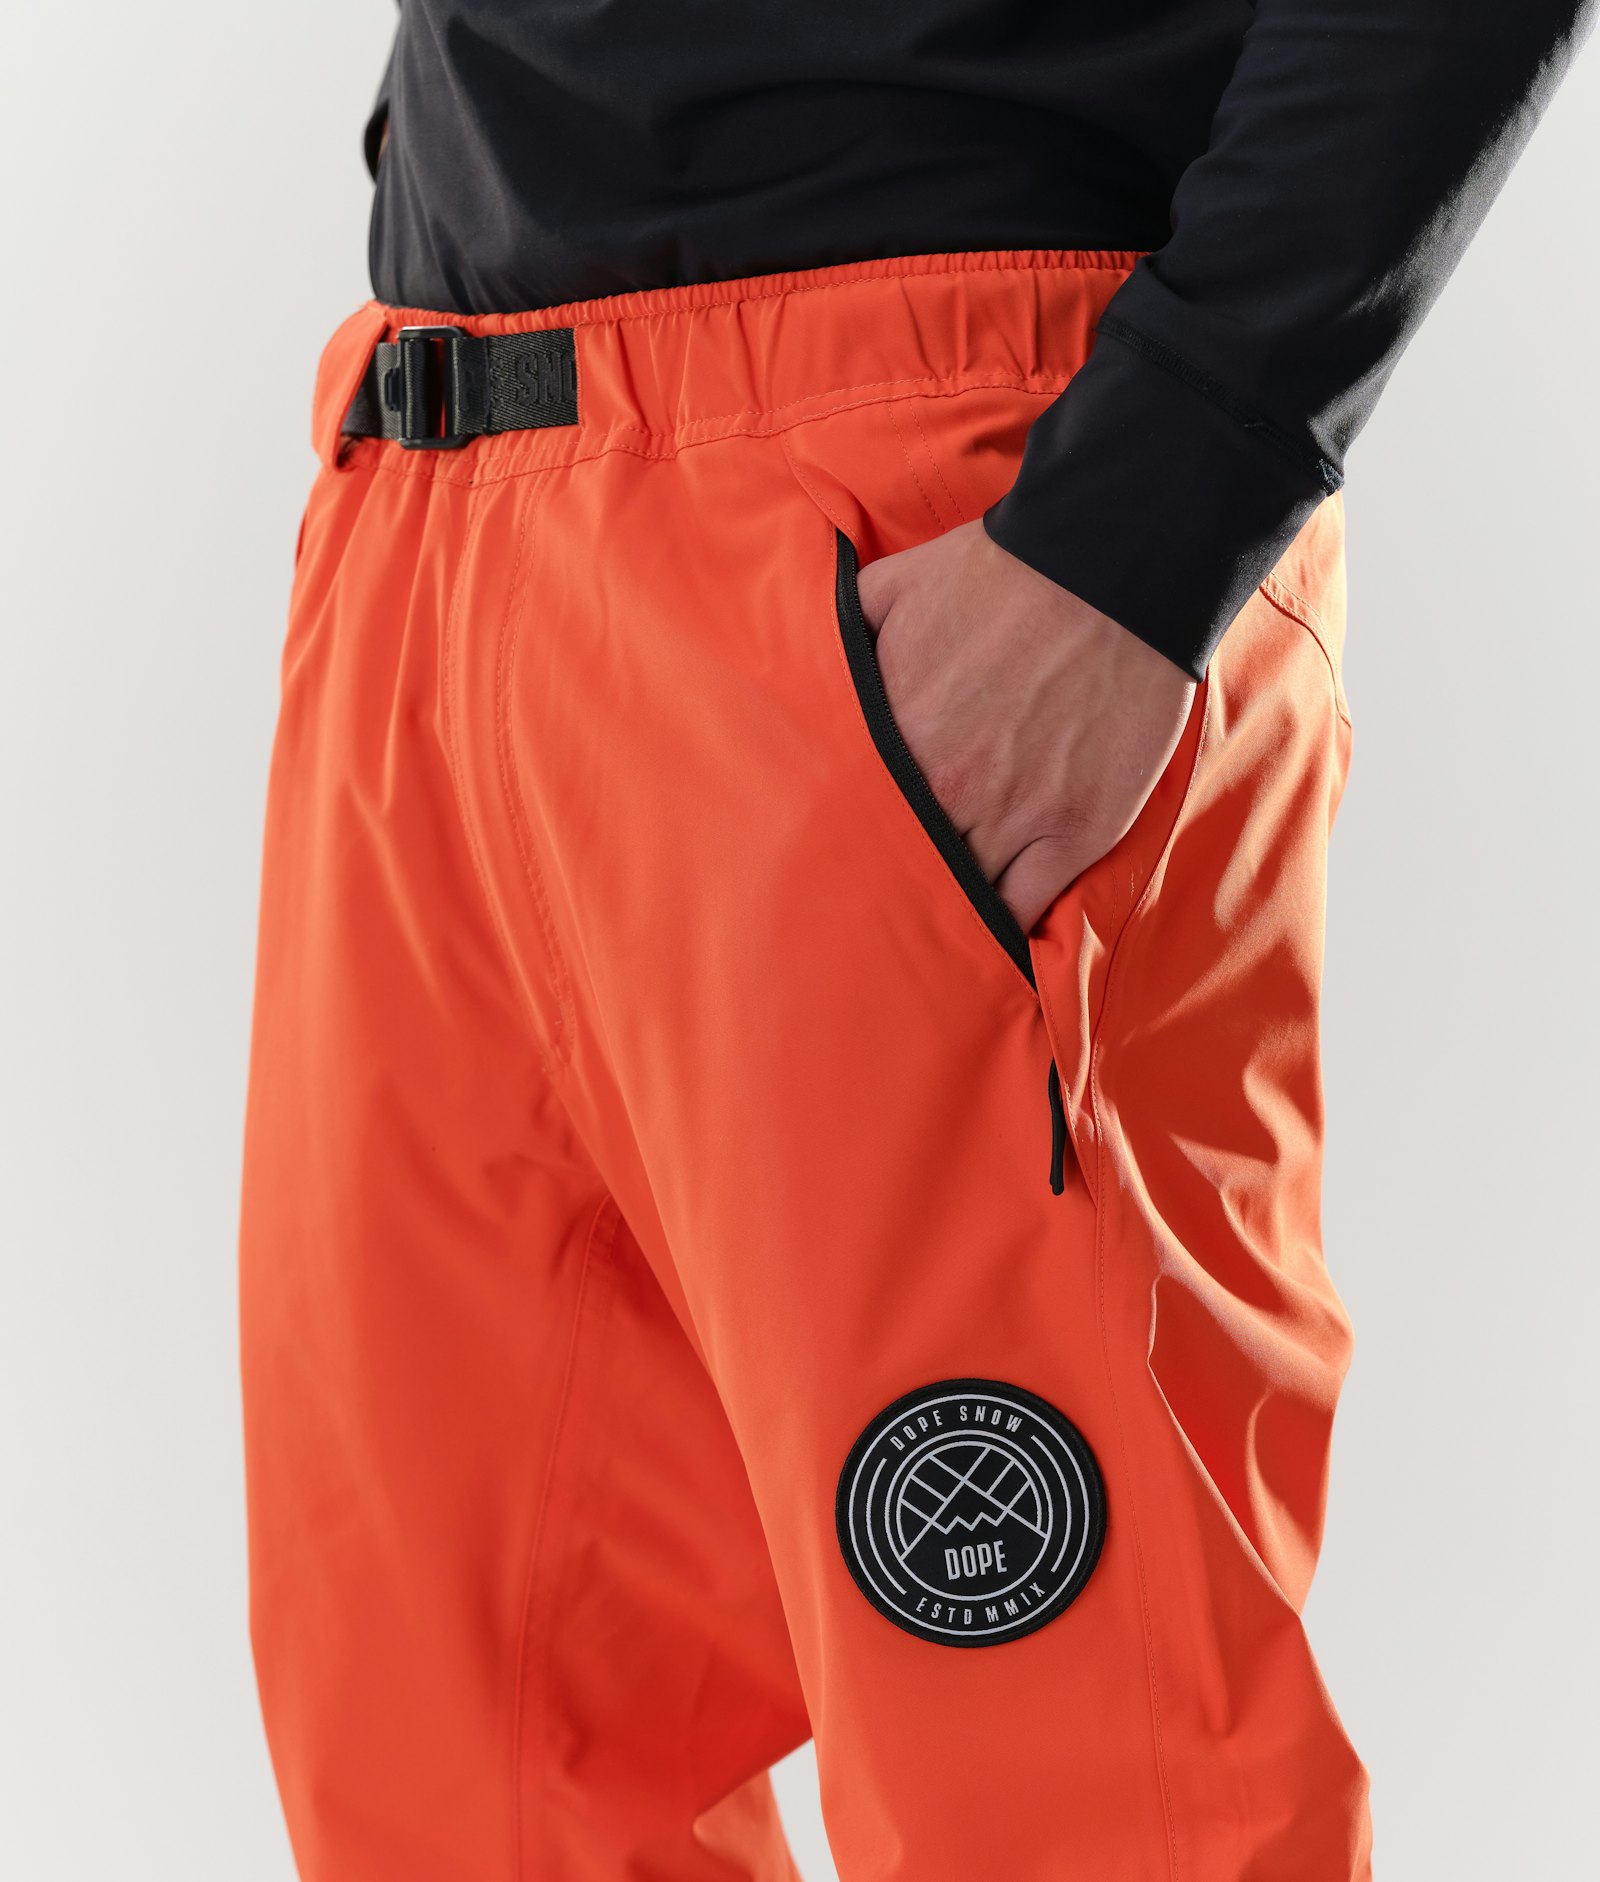 Blizzard 2020 Snowboard Pants Men Orange